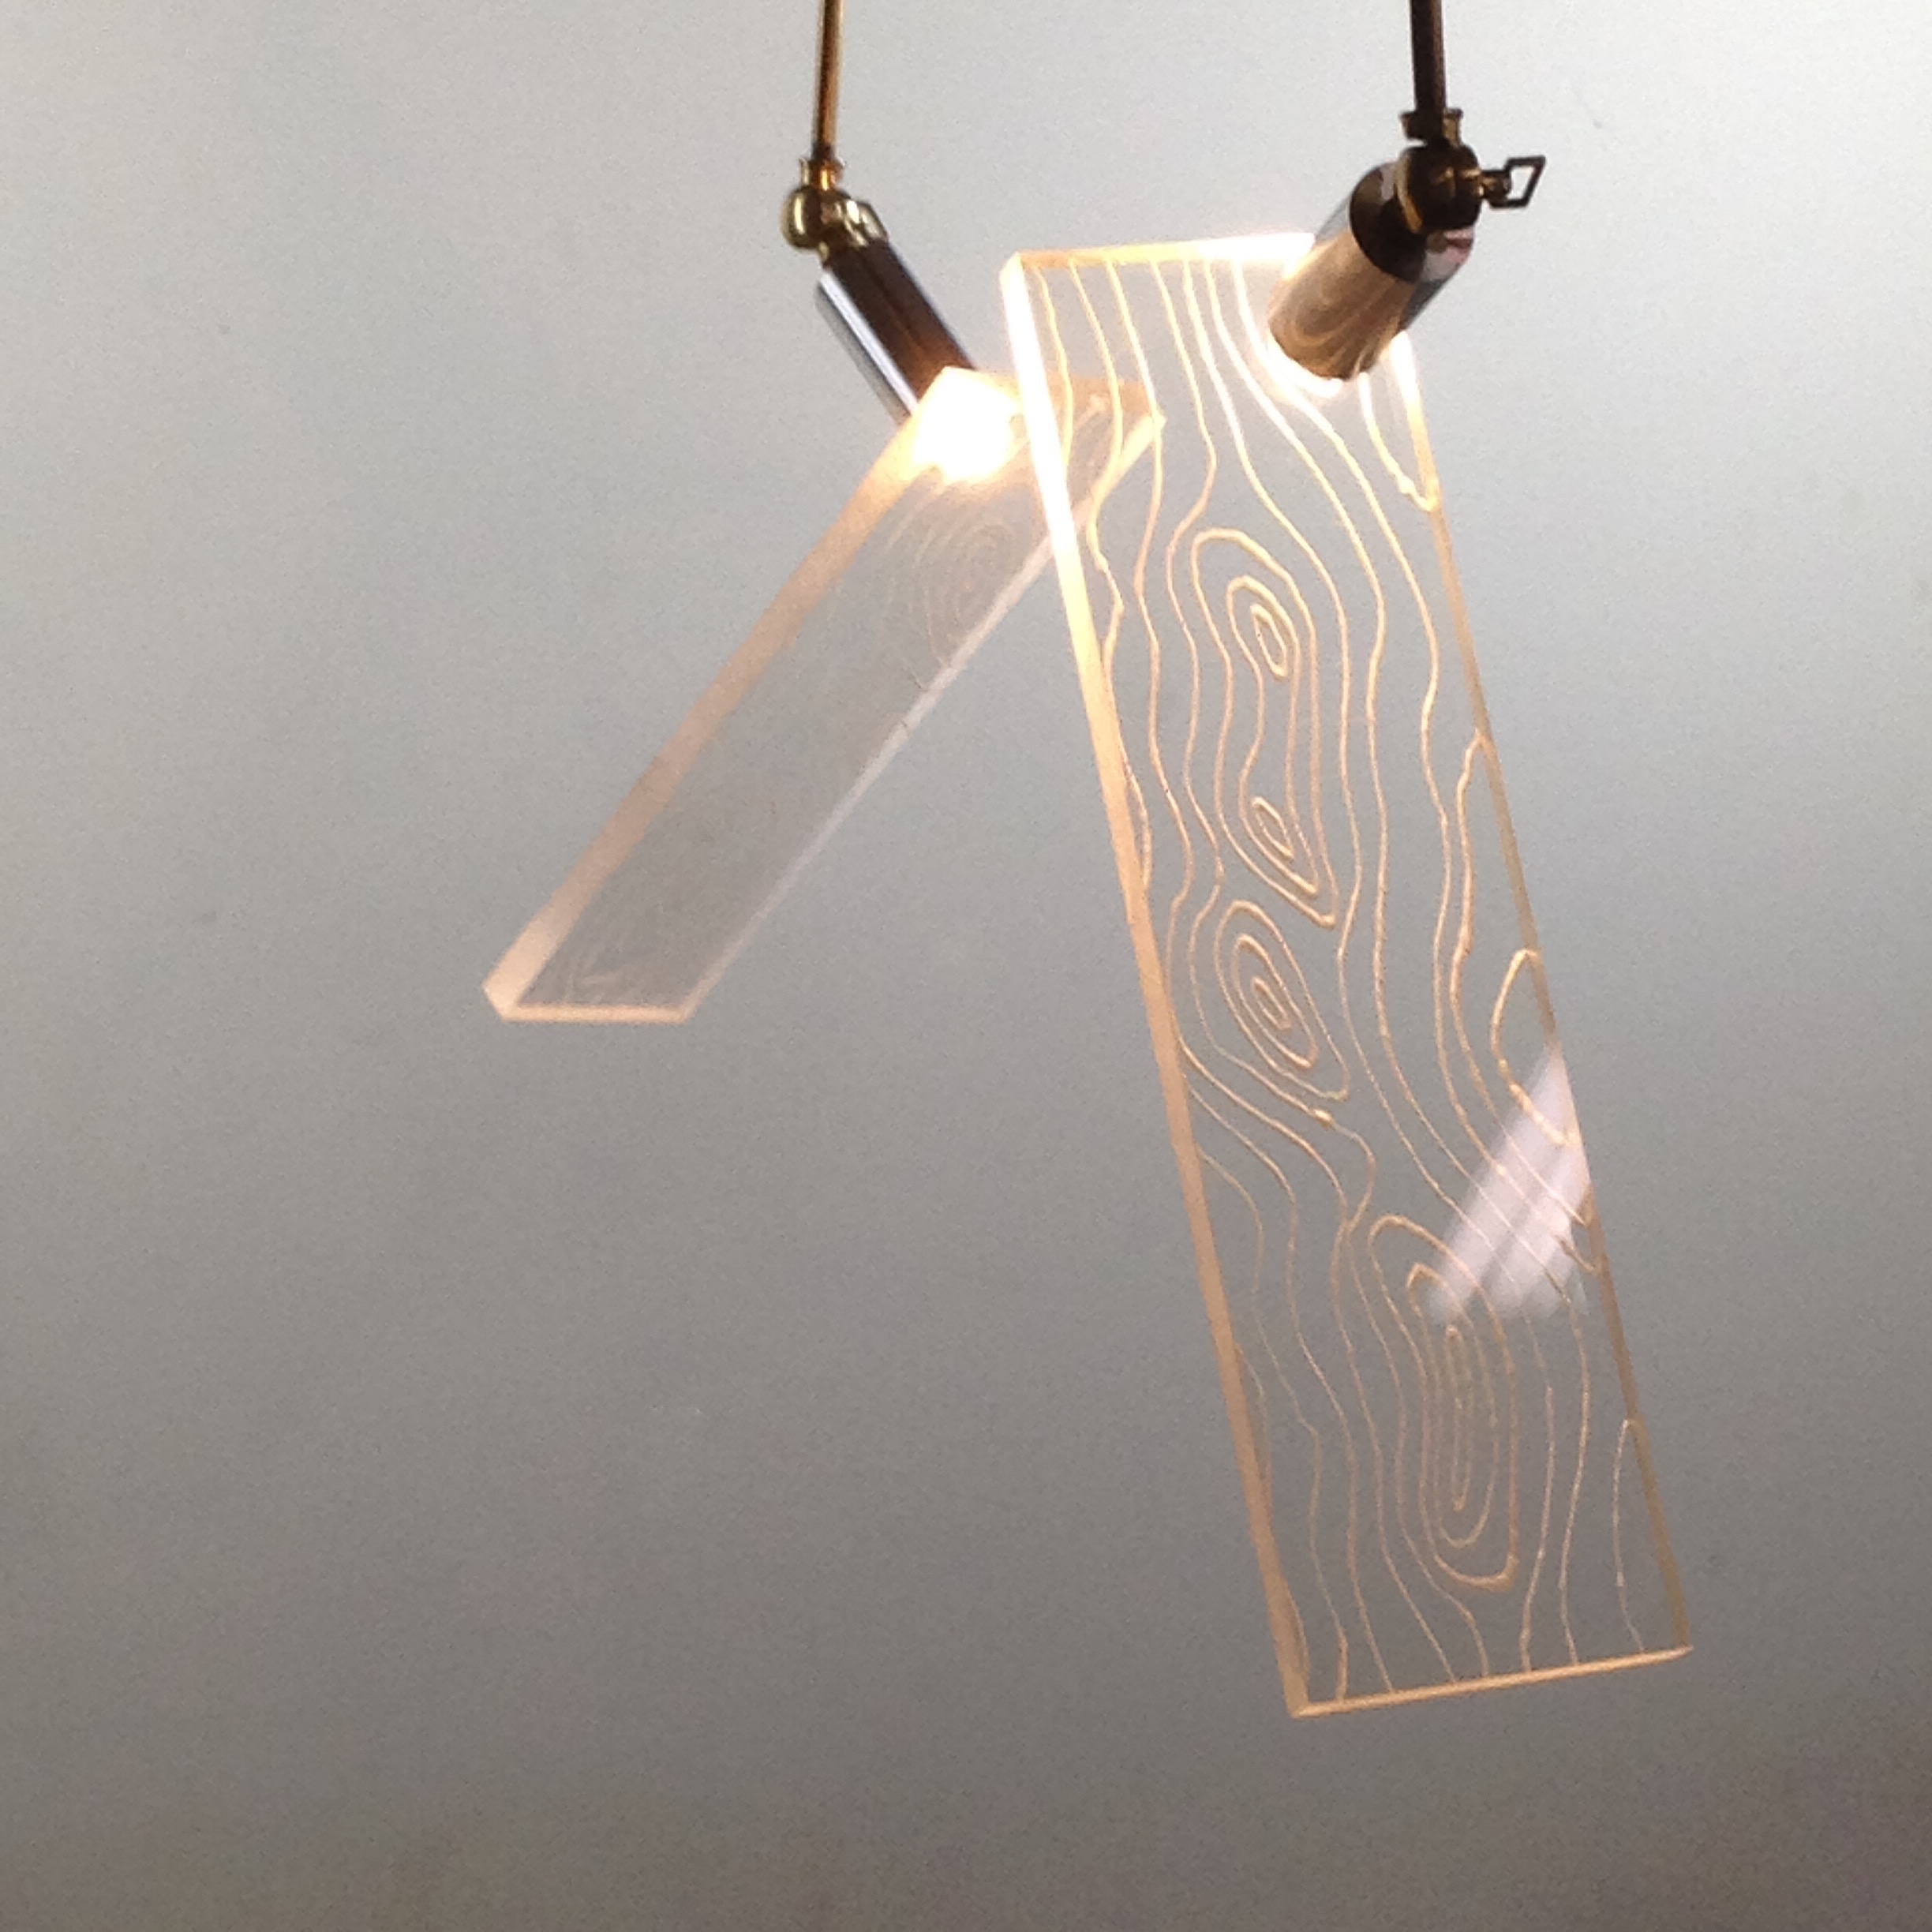 1x4 Lumber Lamp adjustable pendants